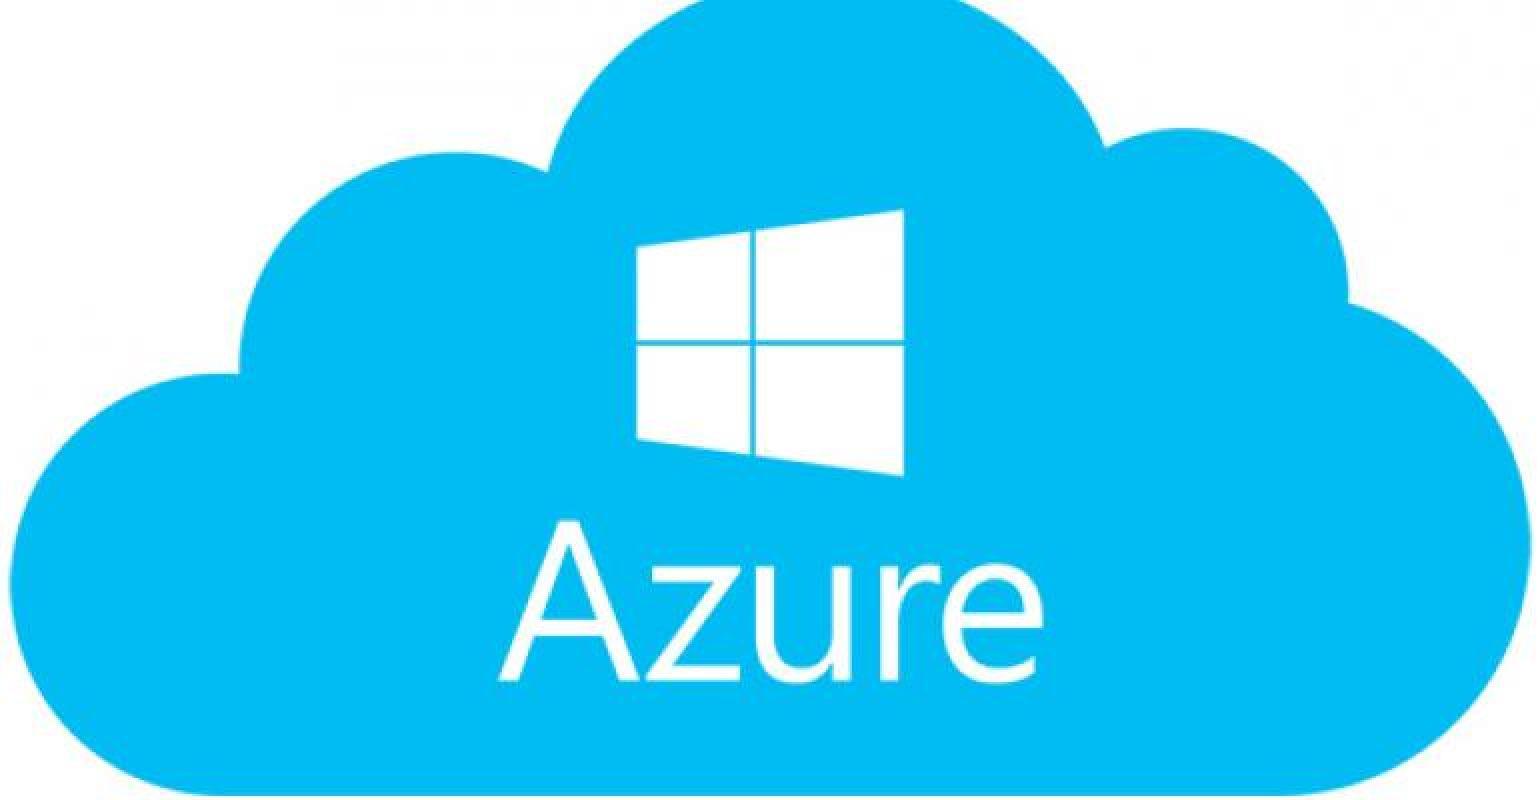 4 Weeks Microsoft Azure training for Beginners in Biloxi | Microsoft Azure Fundamentals | Azure cloud computing training | Microsoft Azure Fundamentals AZ-900 Certification Exam Prep (Preparation) Training Course